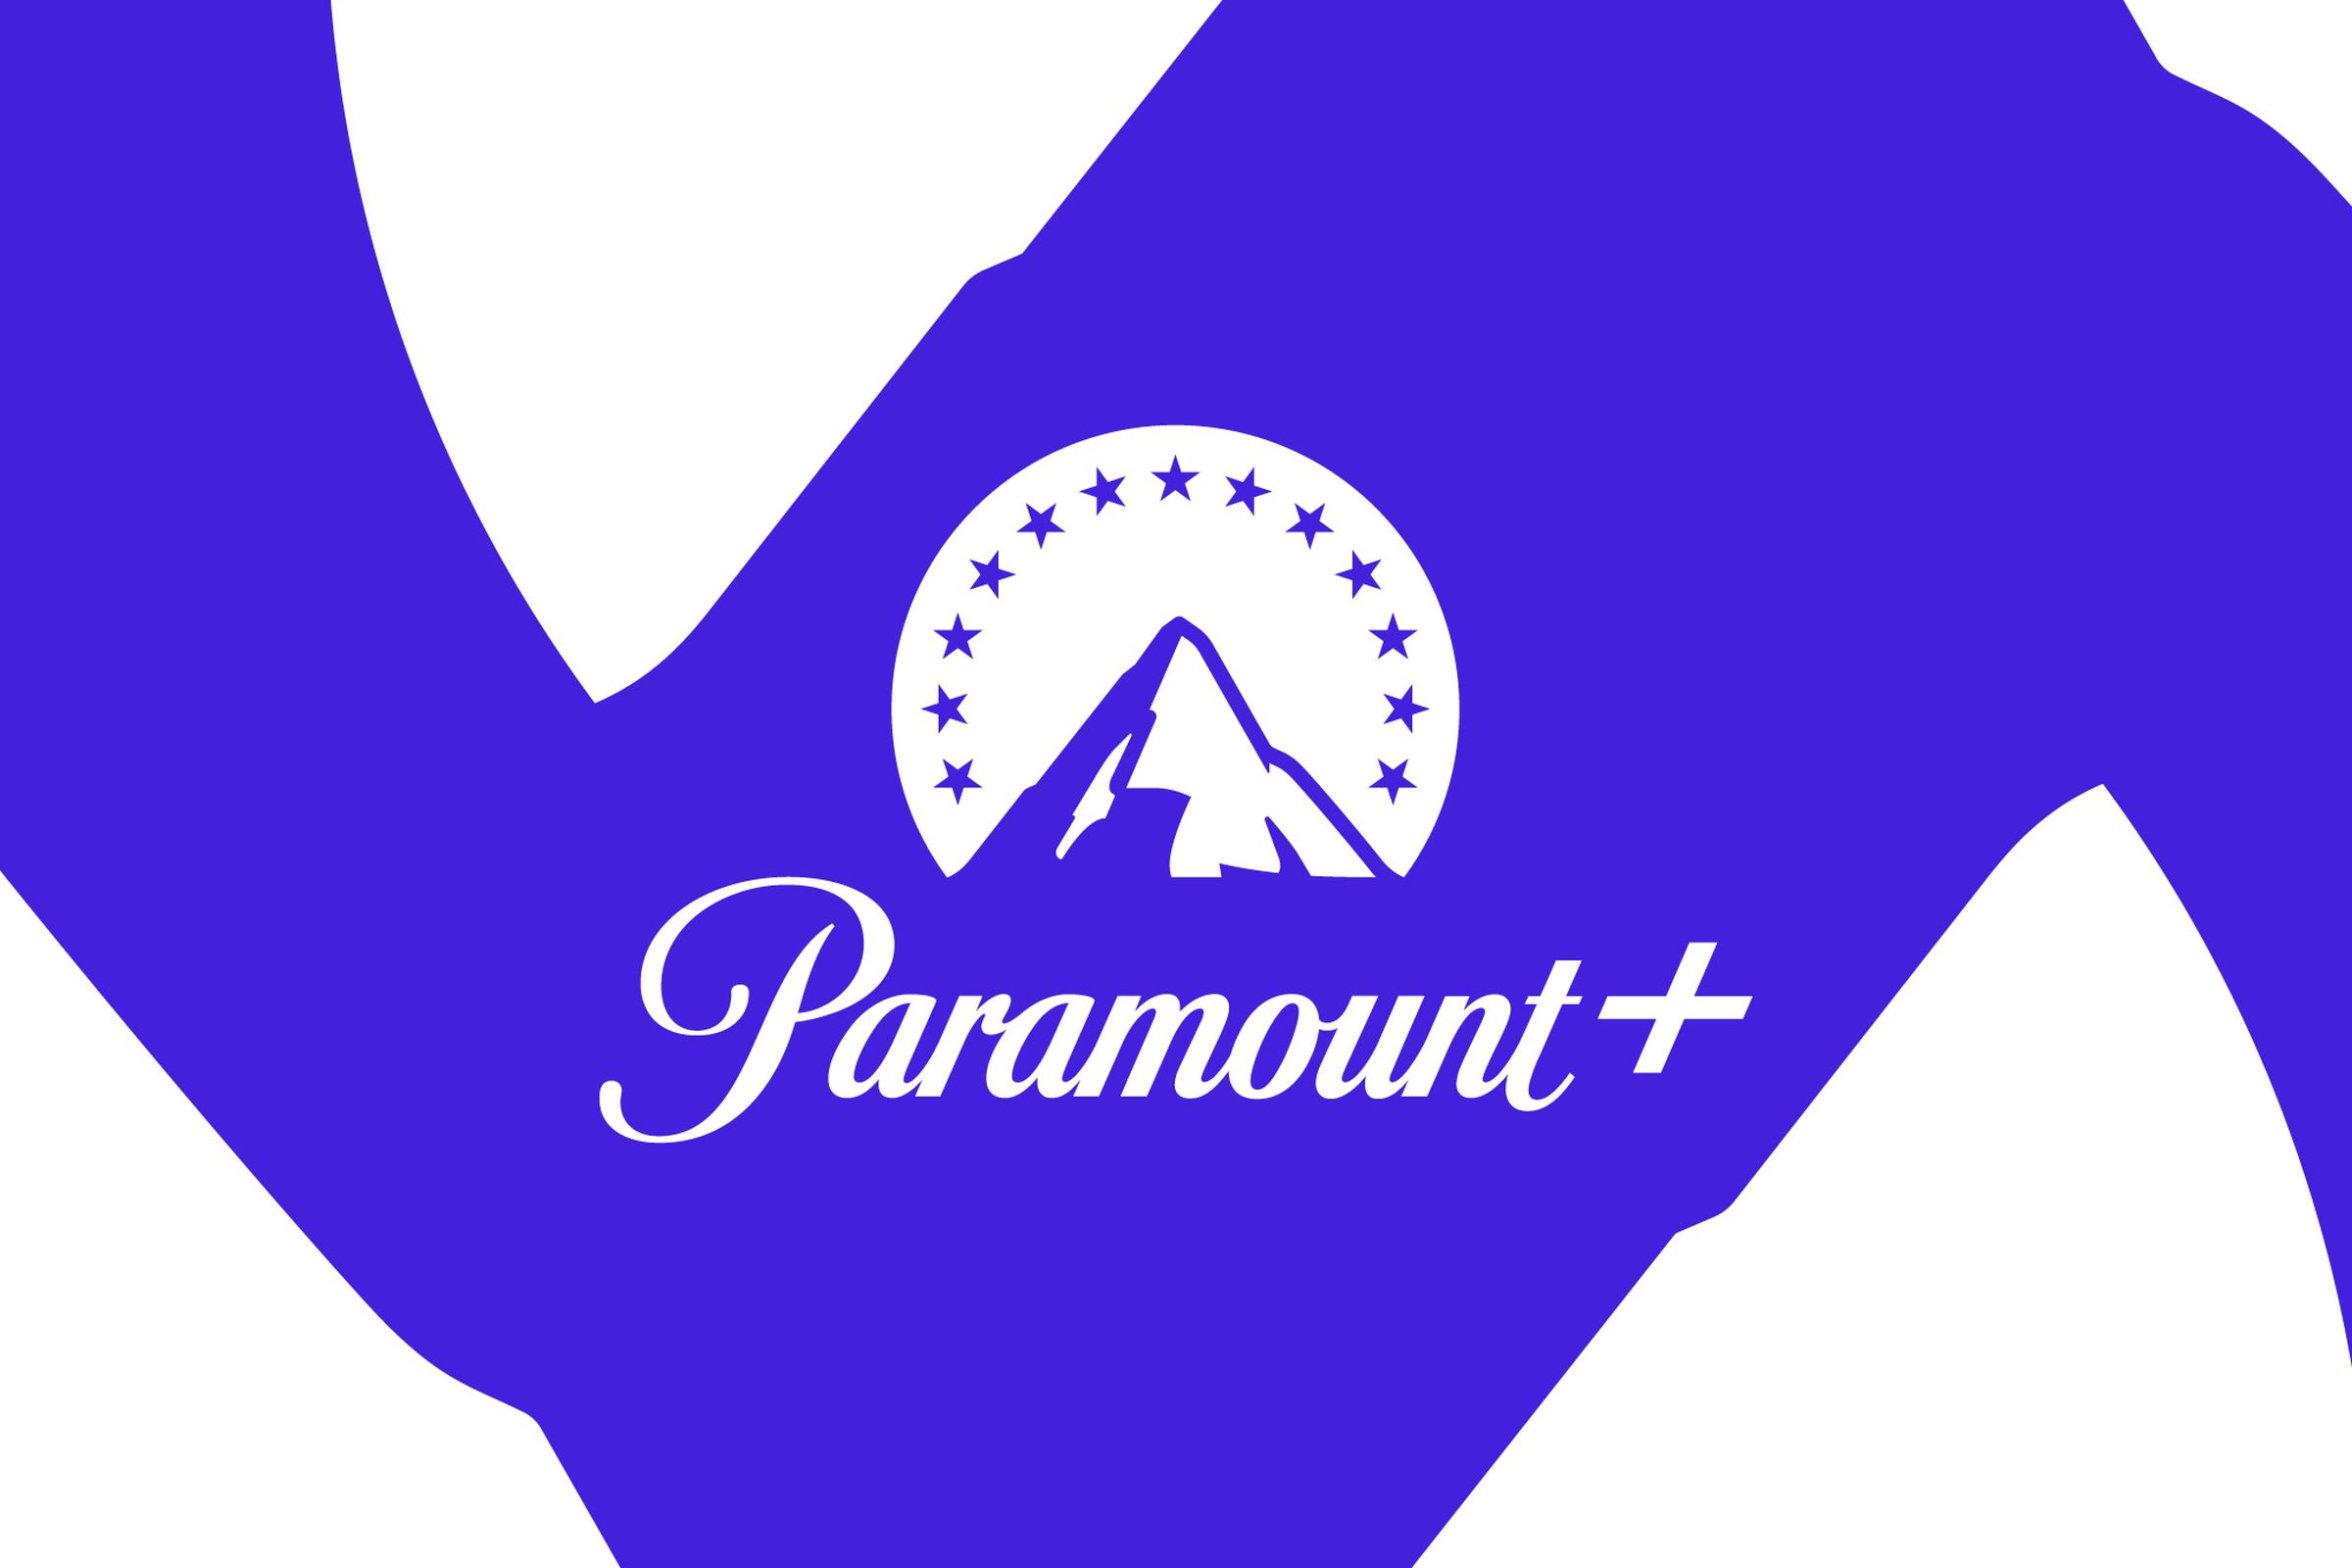 An image showing the Paramount Plus logo